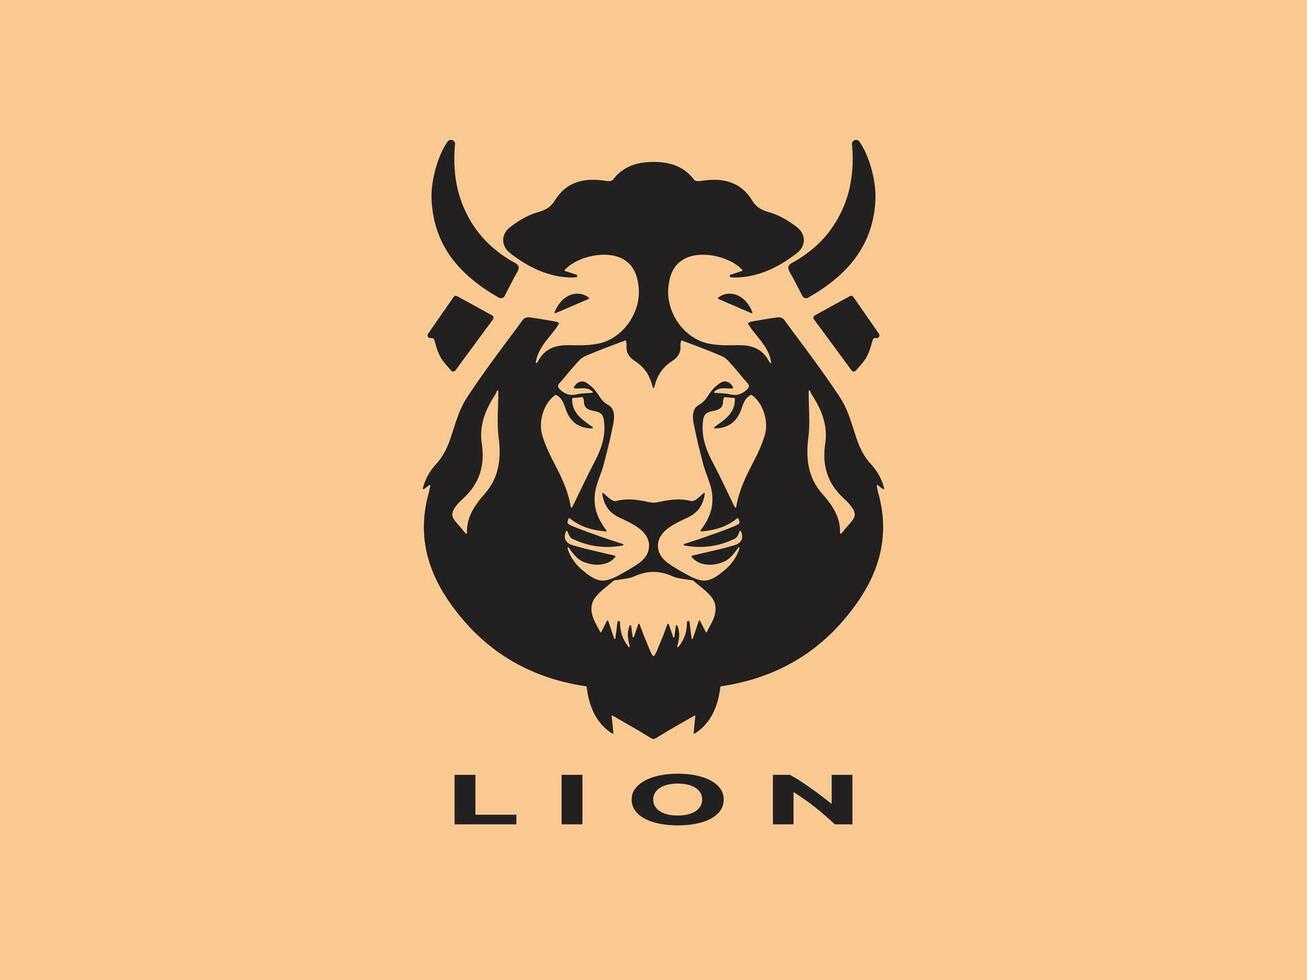 Viking lion logo design vector template